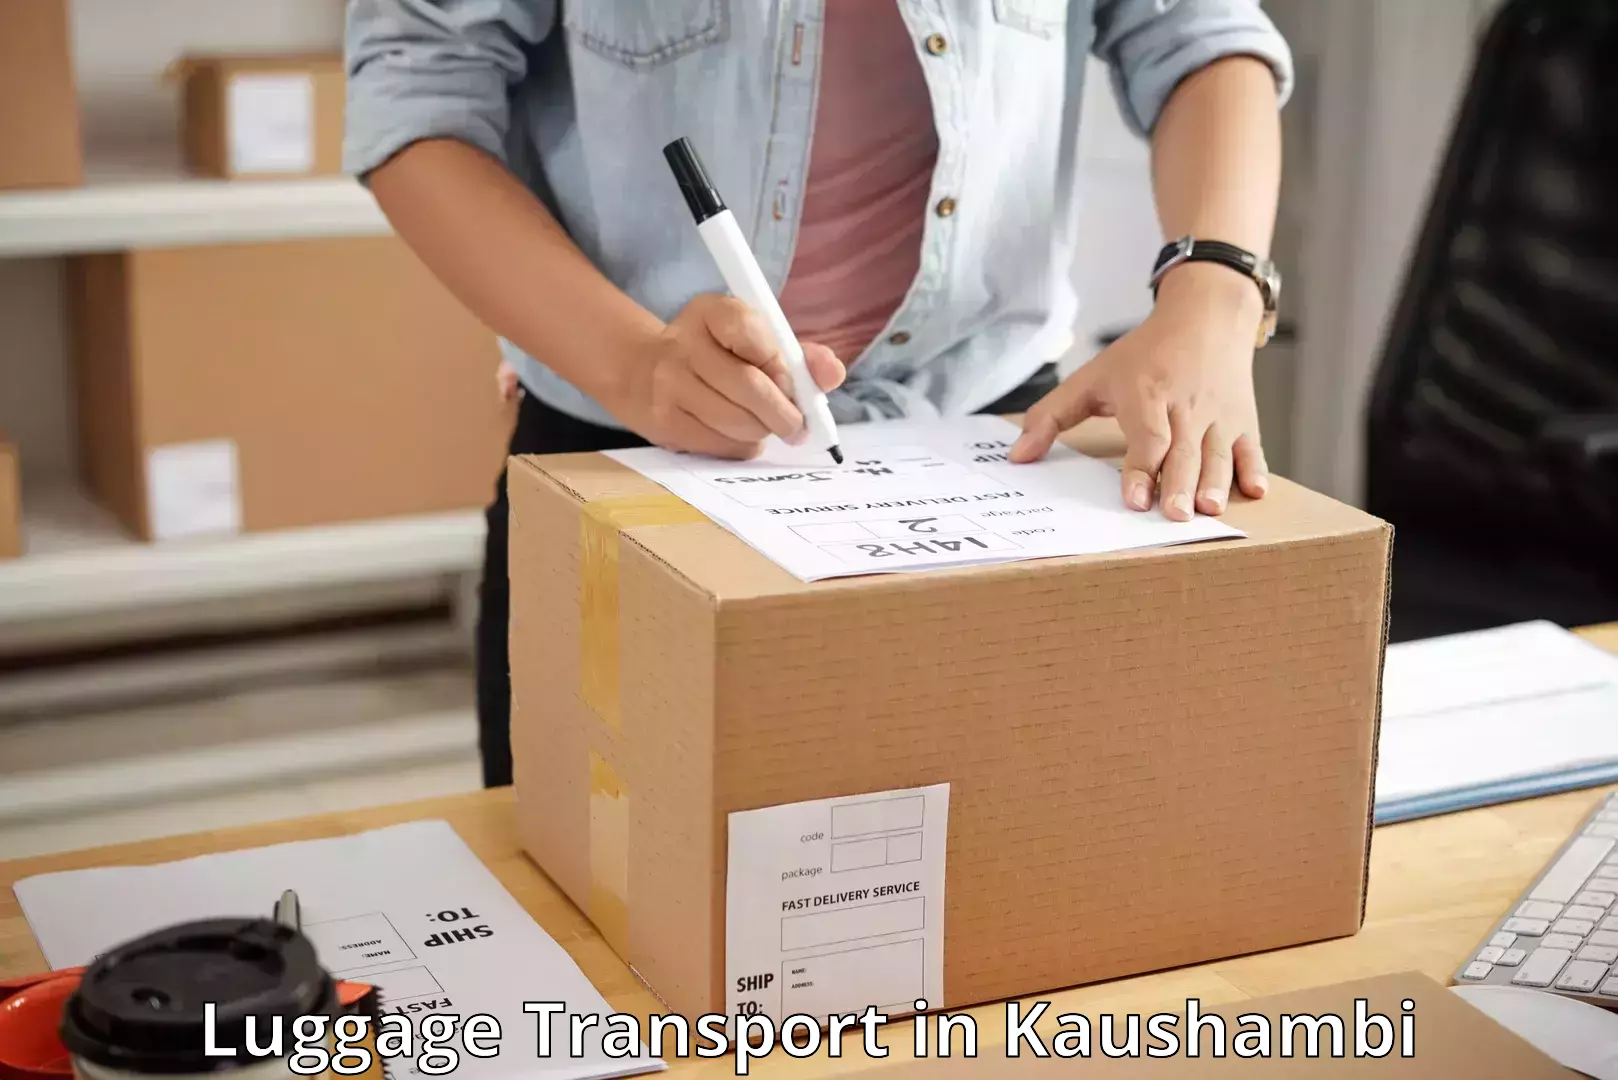 Baggage transport cost in Kaushambi